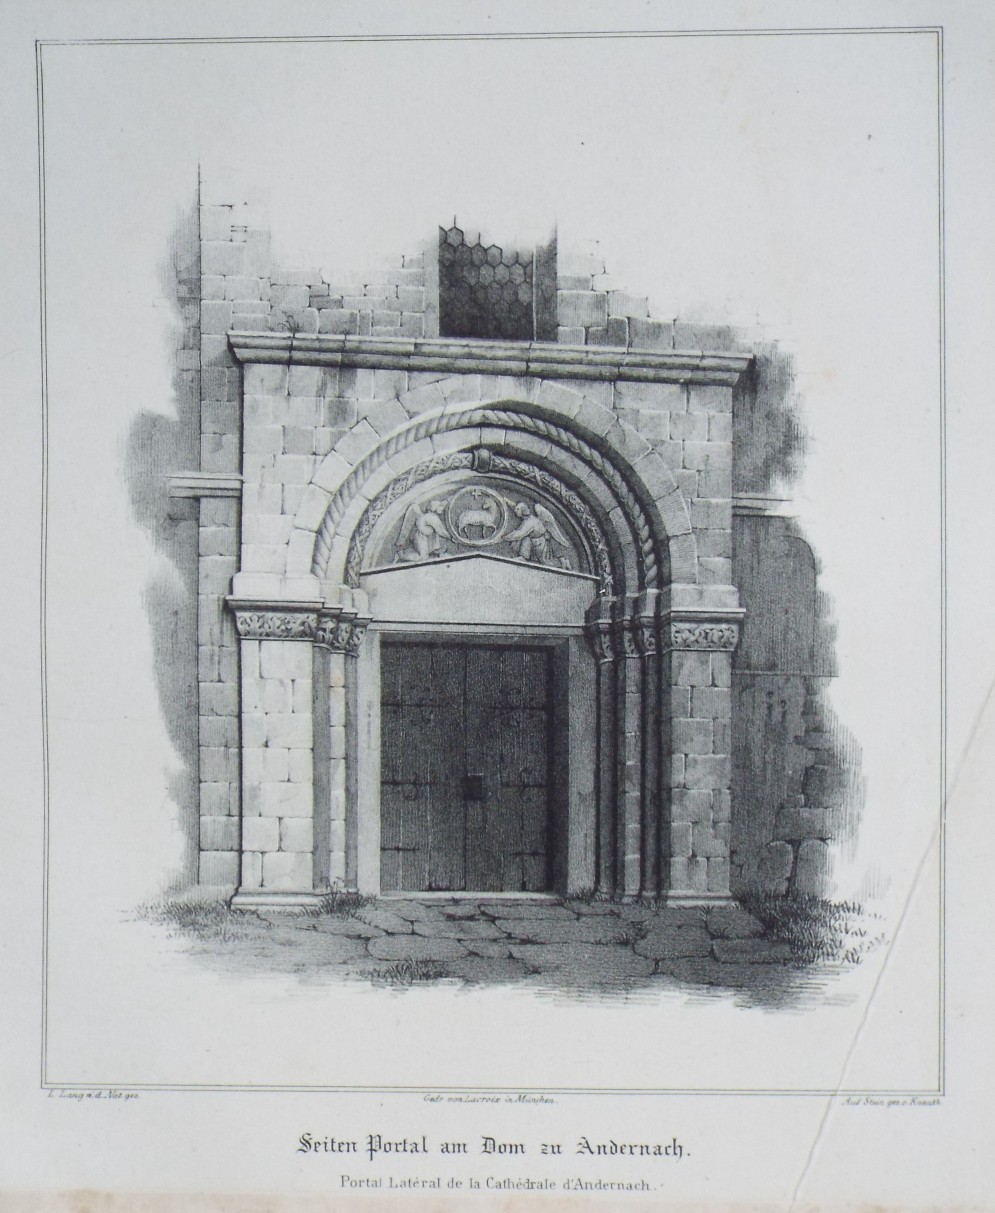 Lithograph - Seiten Portal am Dom in Andernach.
Portal Lateral de la Cathedrale d'Andernach. - 